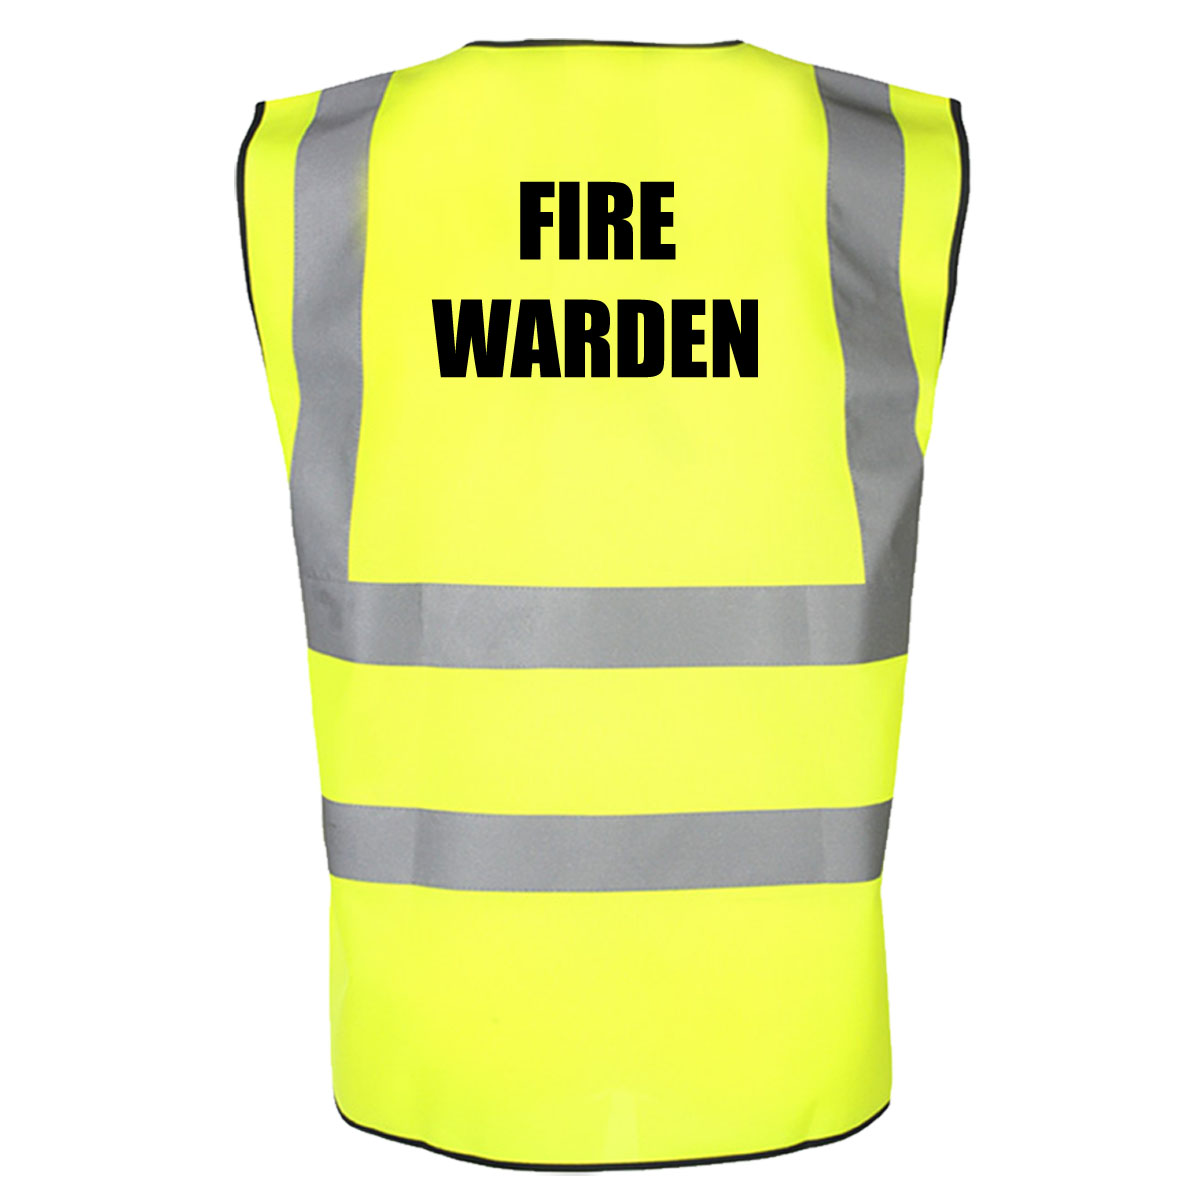 Printed Yellow Fire Warden Hi Vis Viz Vest High Visibility Reflective Waistcoat 